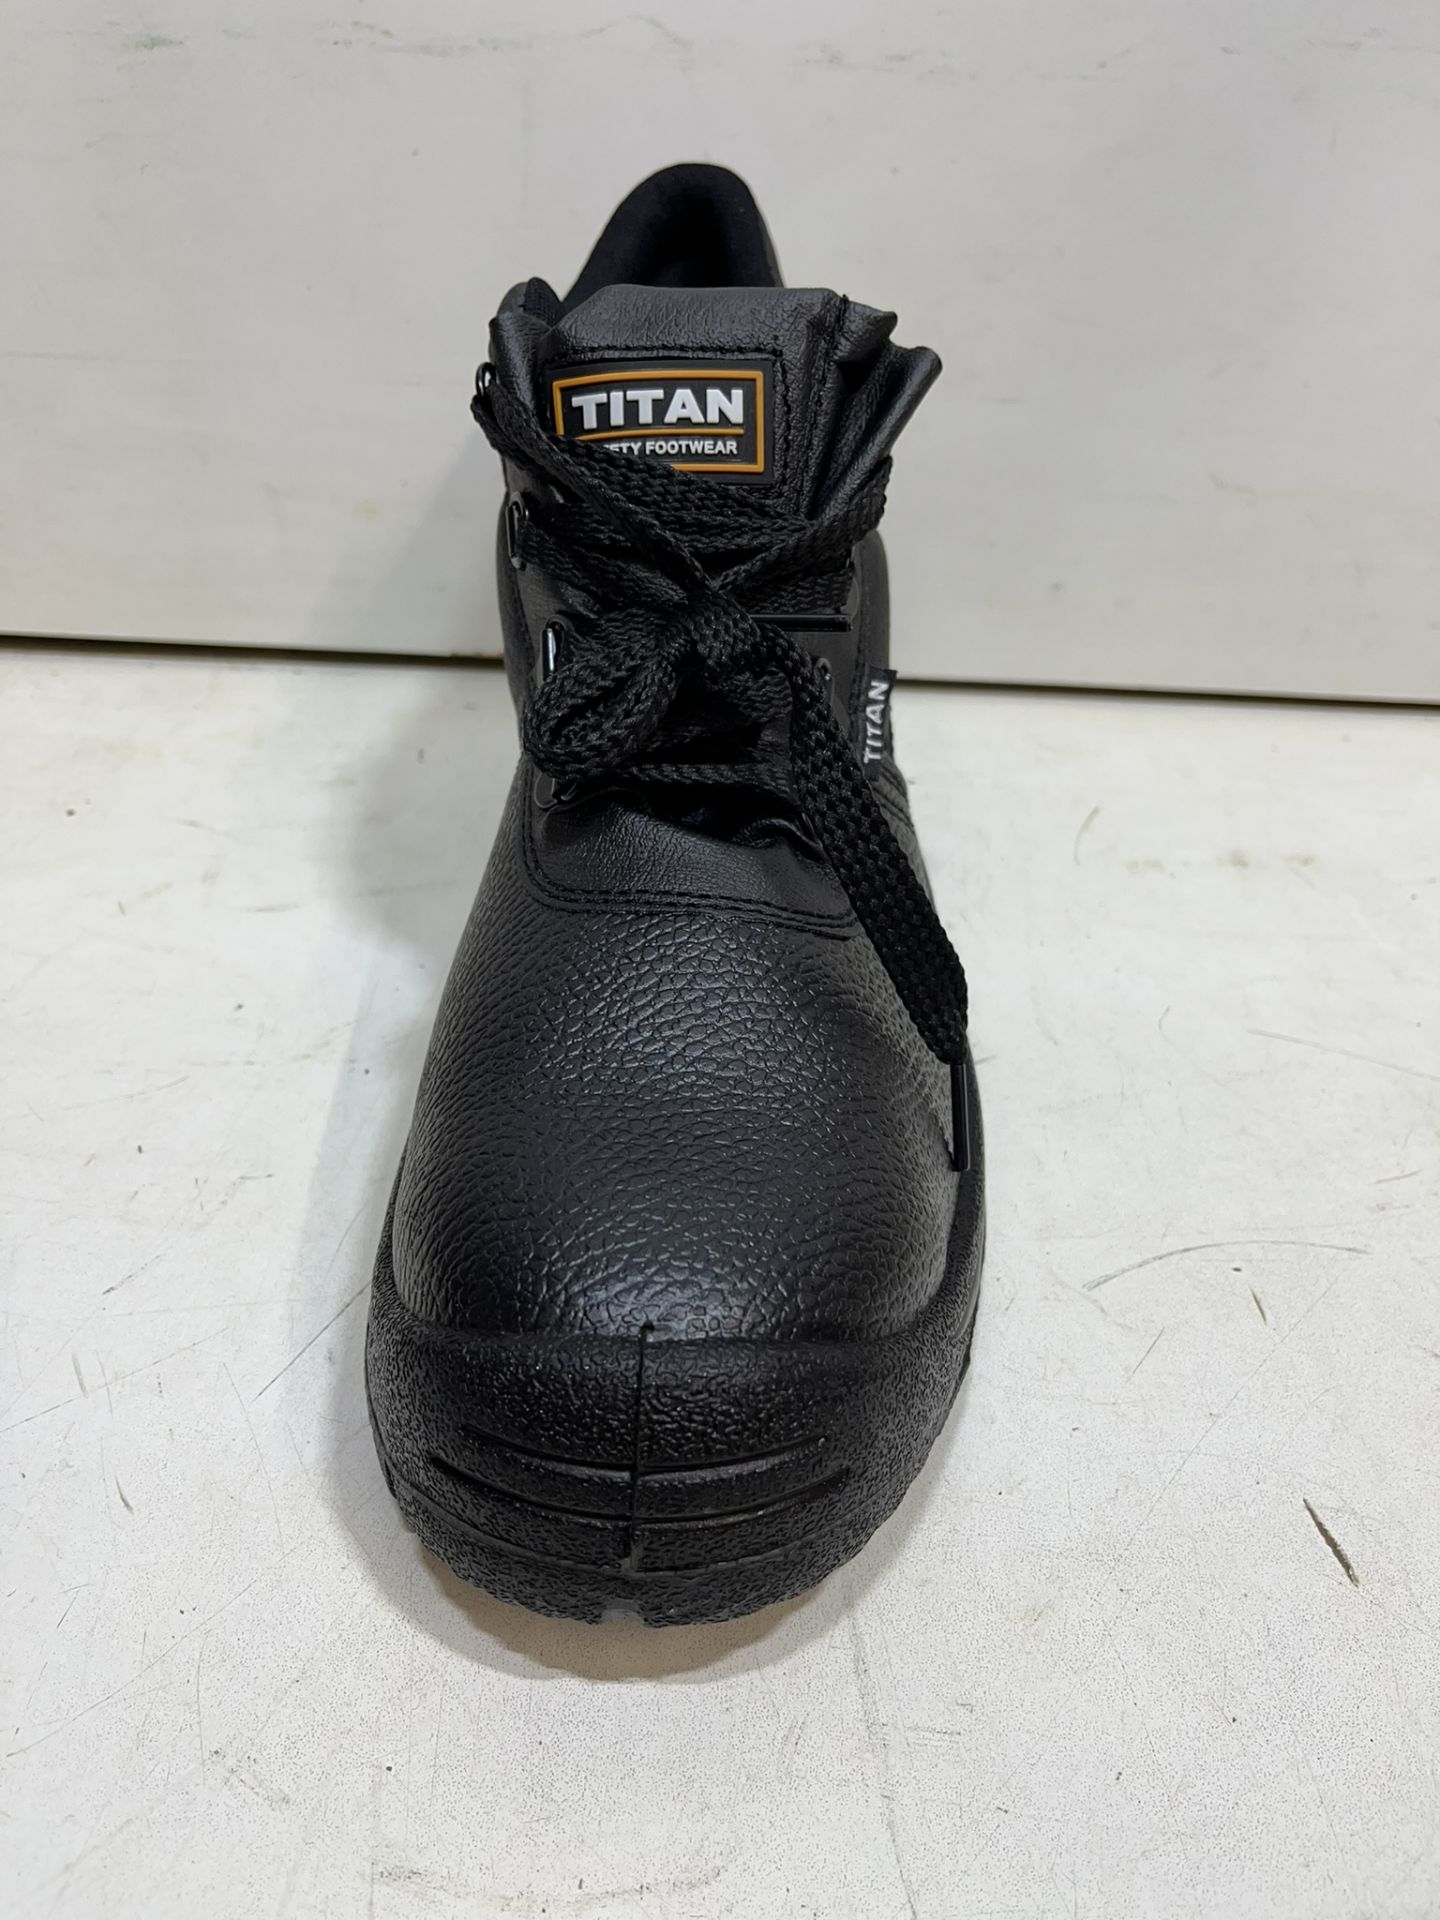 Titan Mercury SBP Black Safety Boots | UK 8 - Image 3 of 4